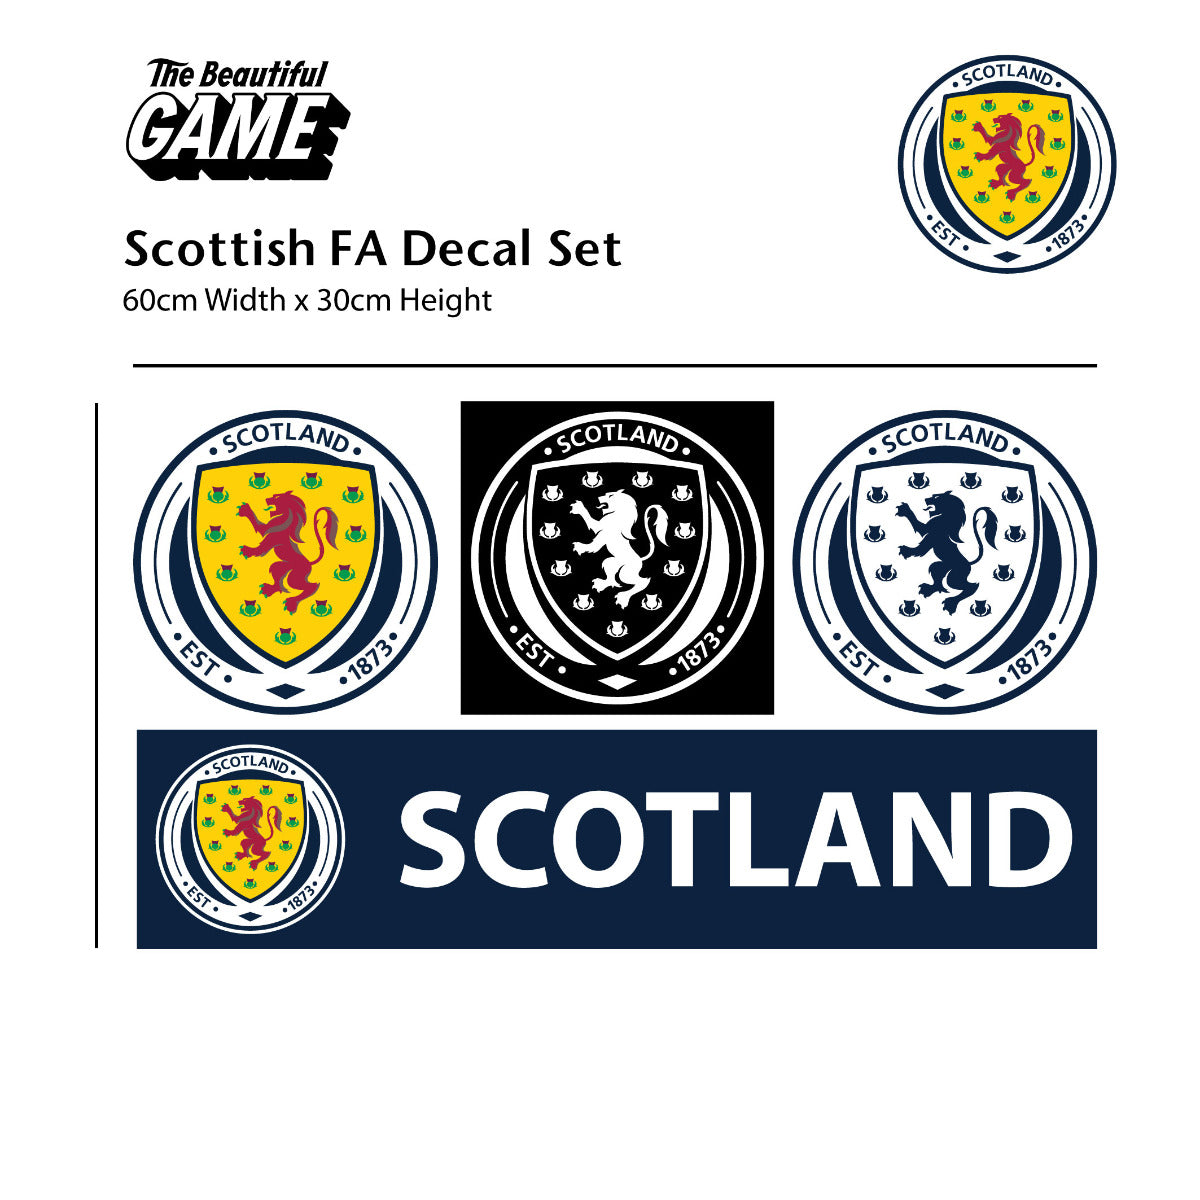 Scotland National Team - Smashed Hampden Park Stadium Wall Sticker + Decal Set